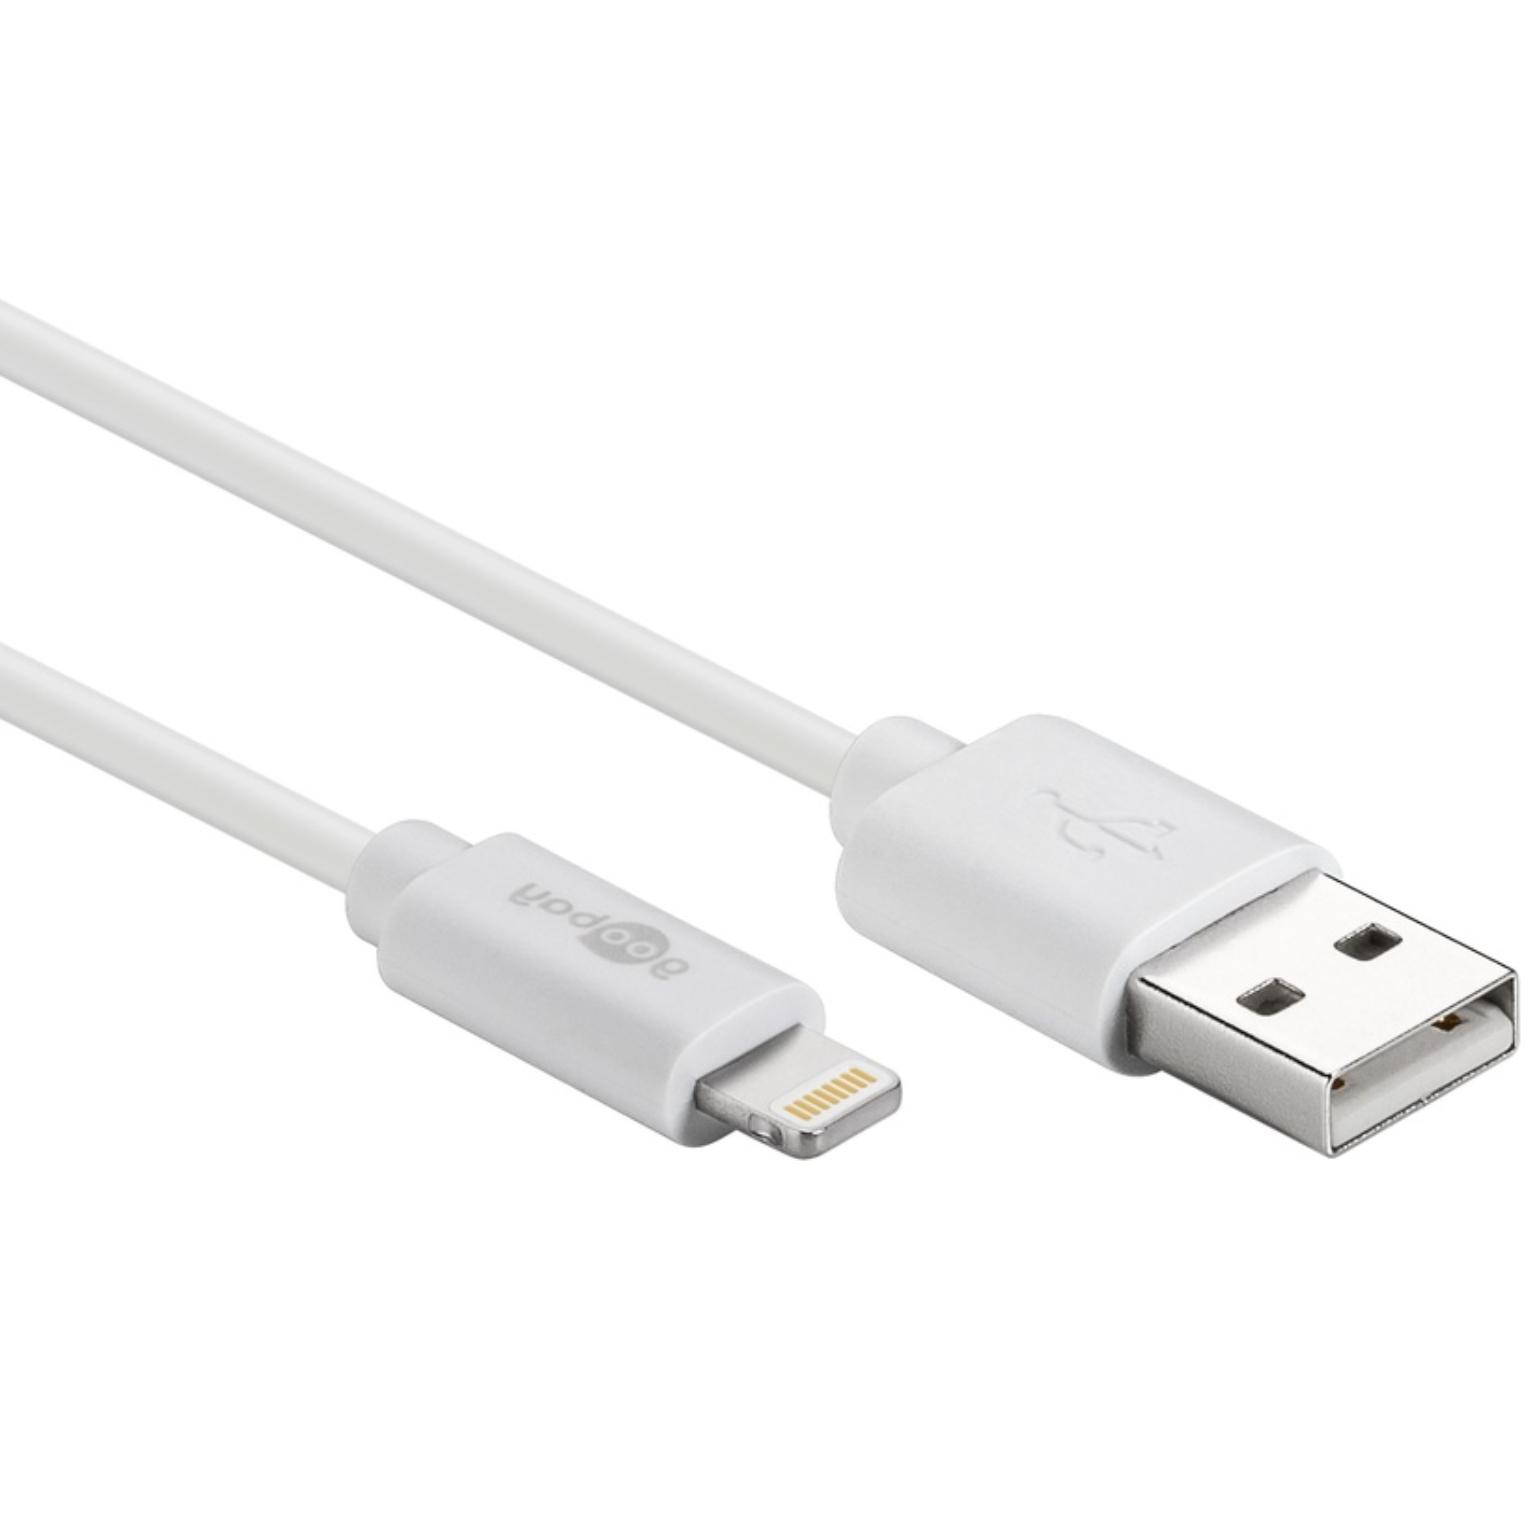 USB Kabel für iPad Pro - Goobay